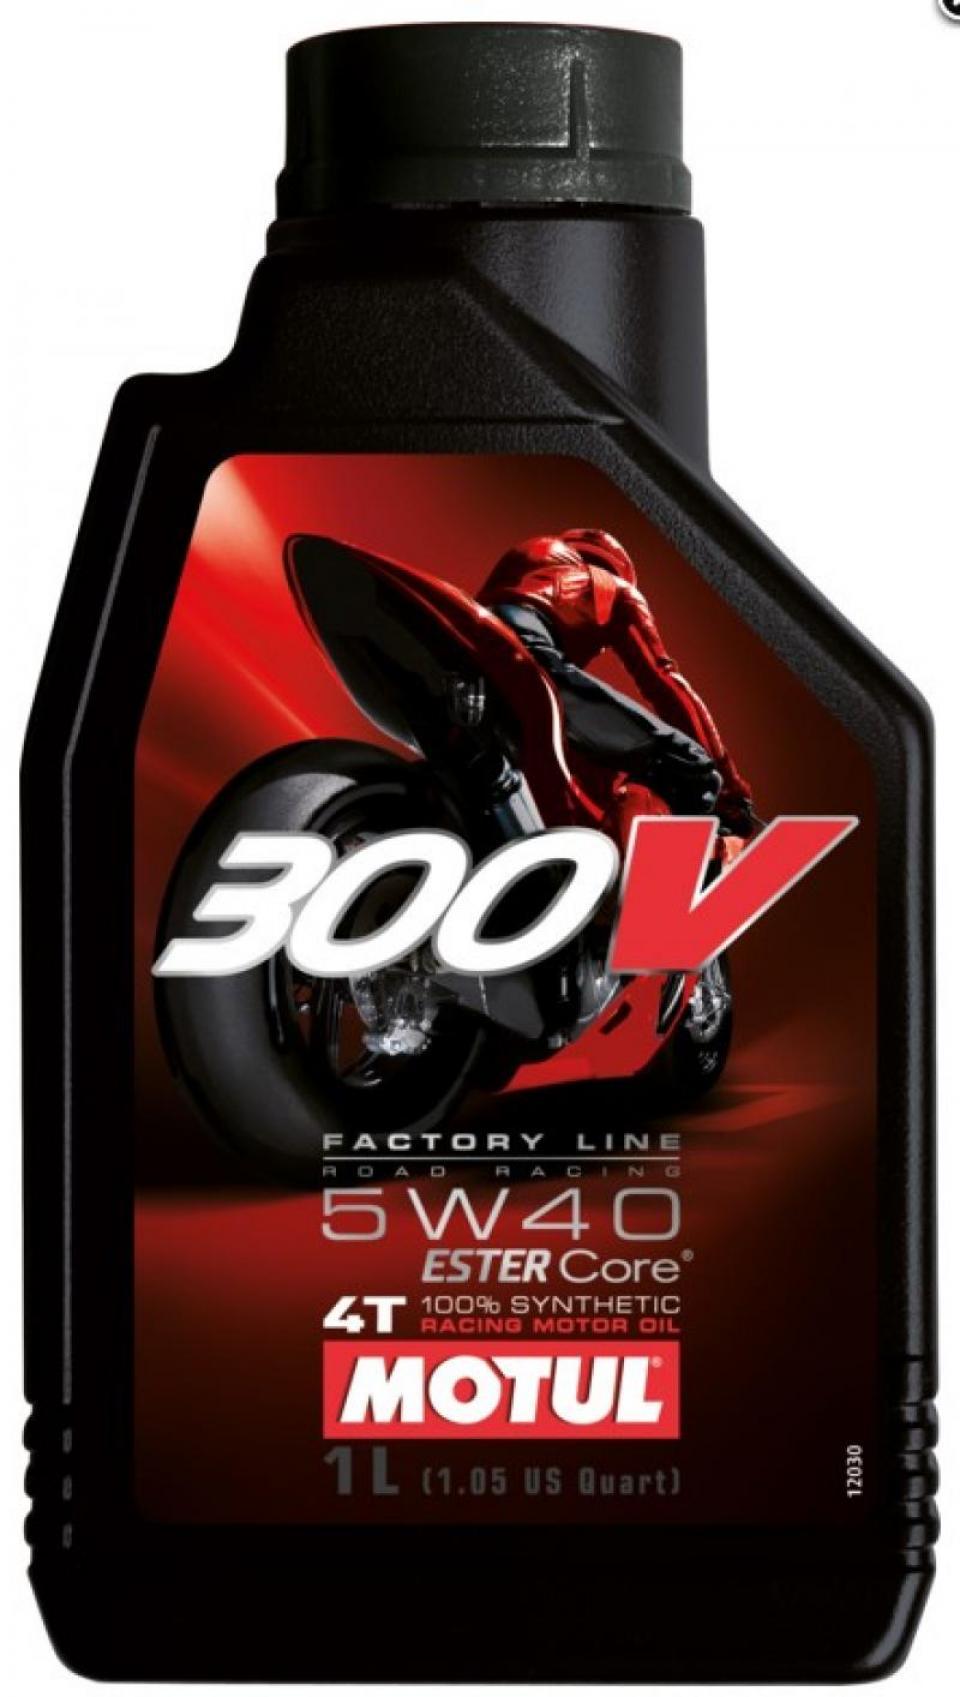 Bidon d'huile MOTUL 300V Factory Line Road Racing 5W40 100% synthèse pour moto 1L